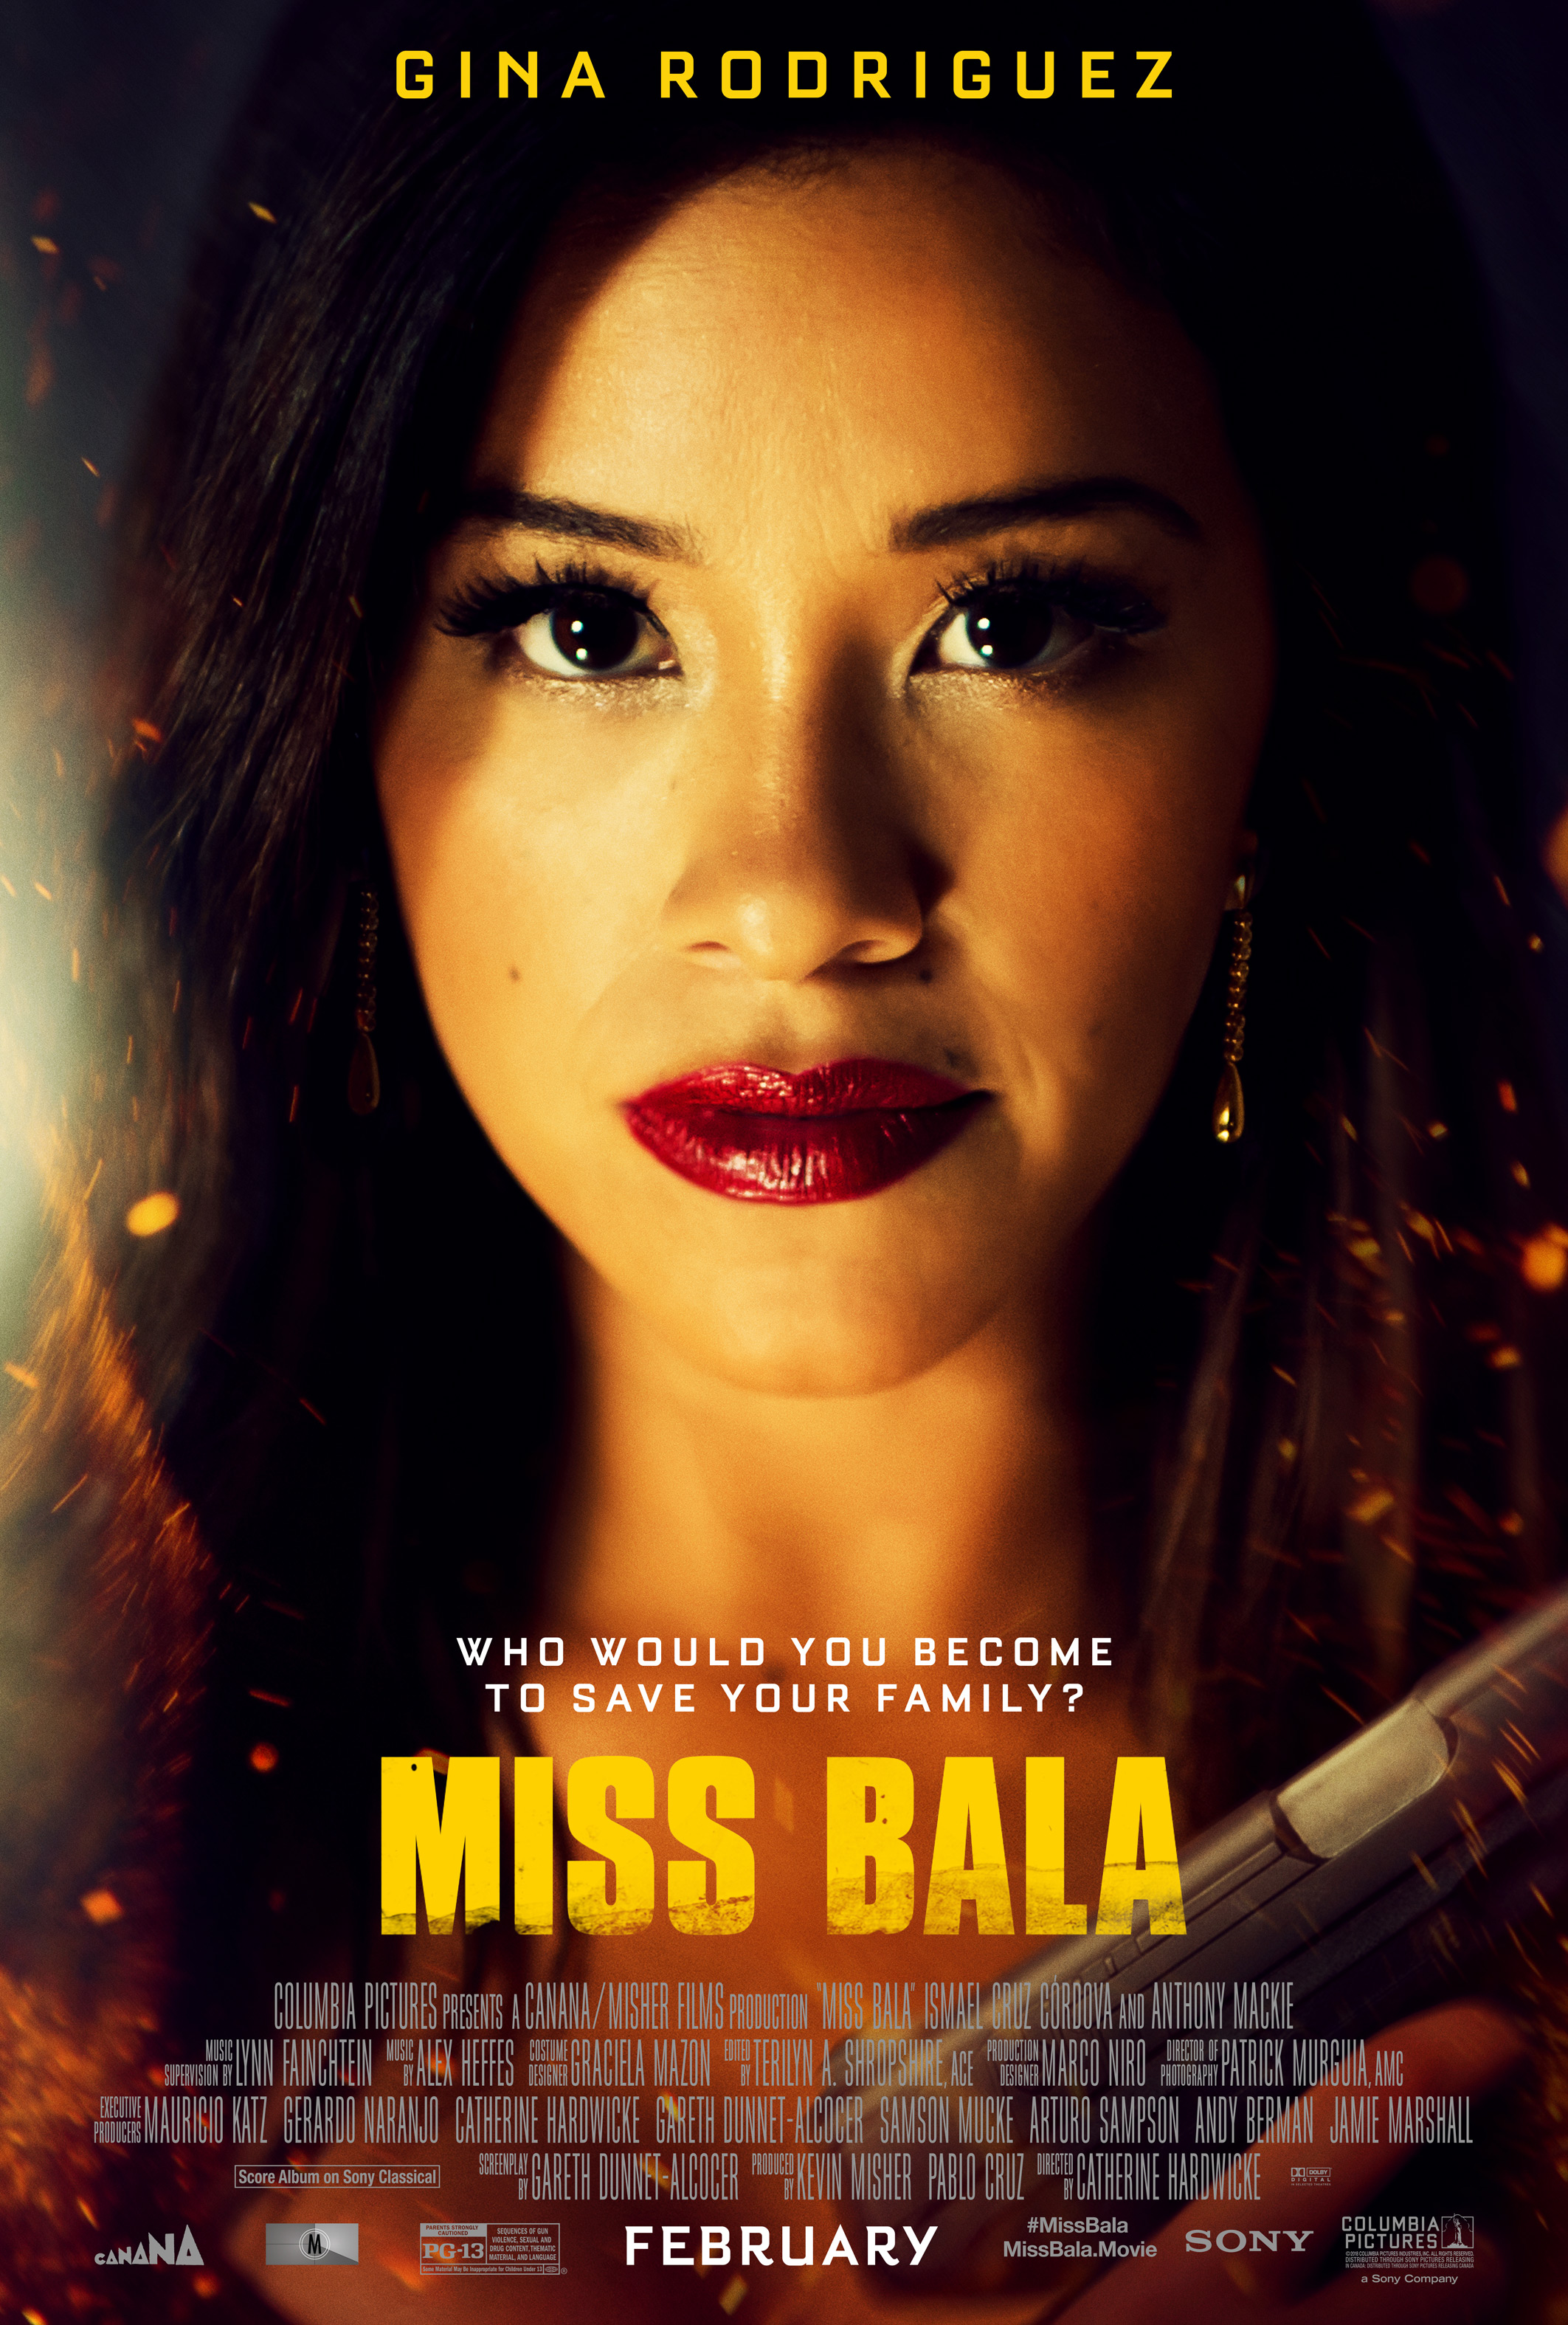 Trailer del remake de Miss Bala con Gina Rodriguez